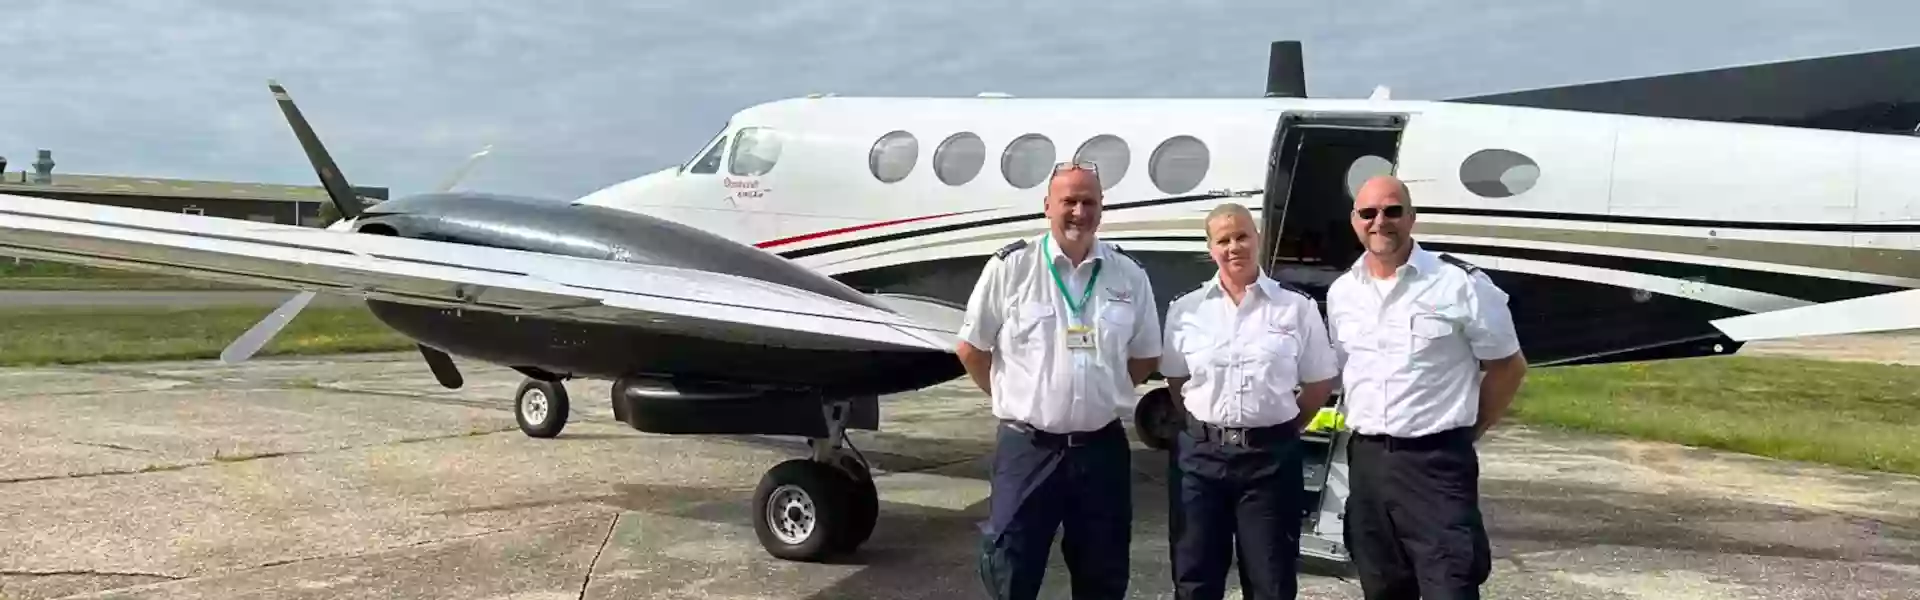 paramedic team with aircraft